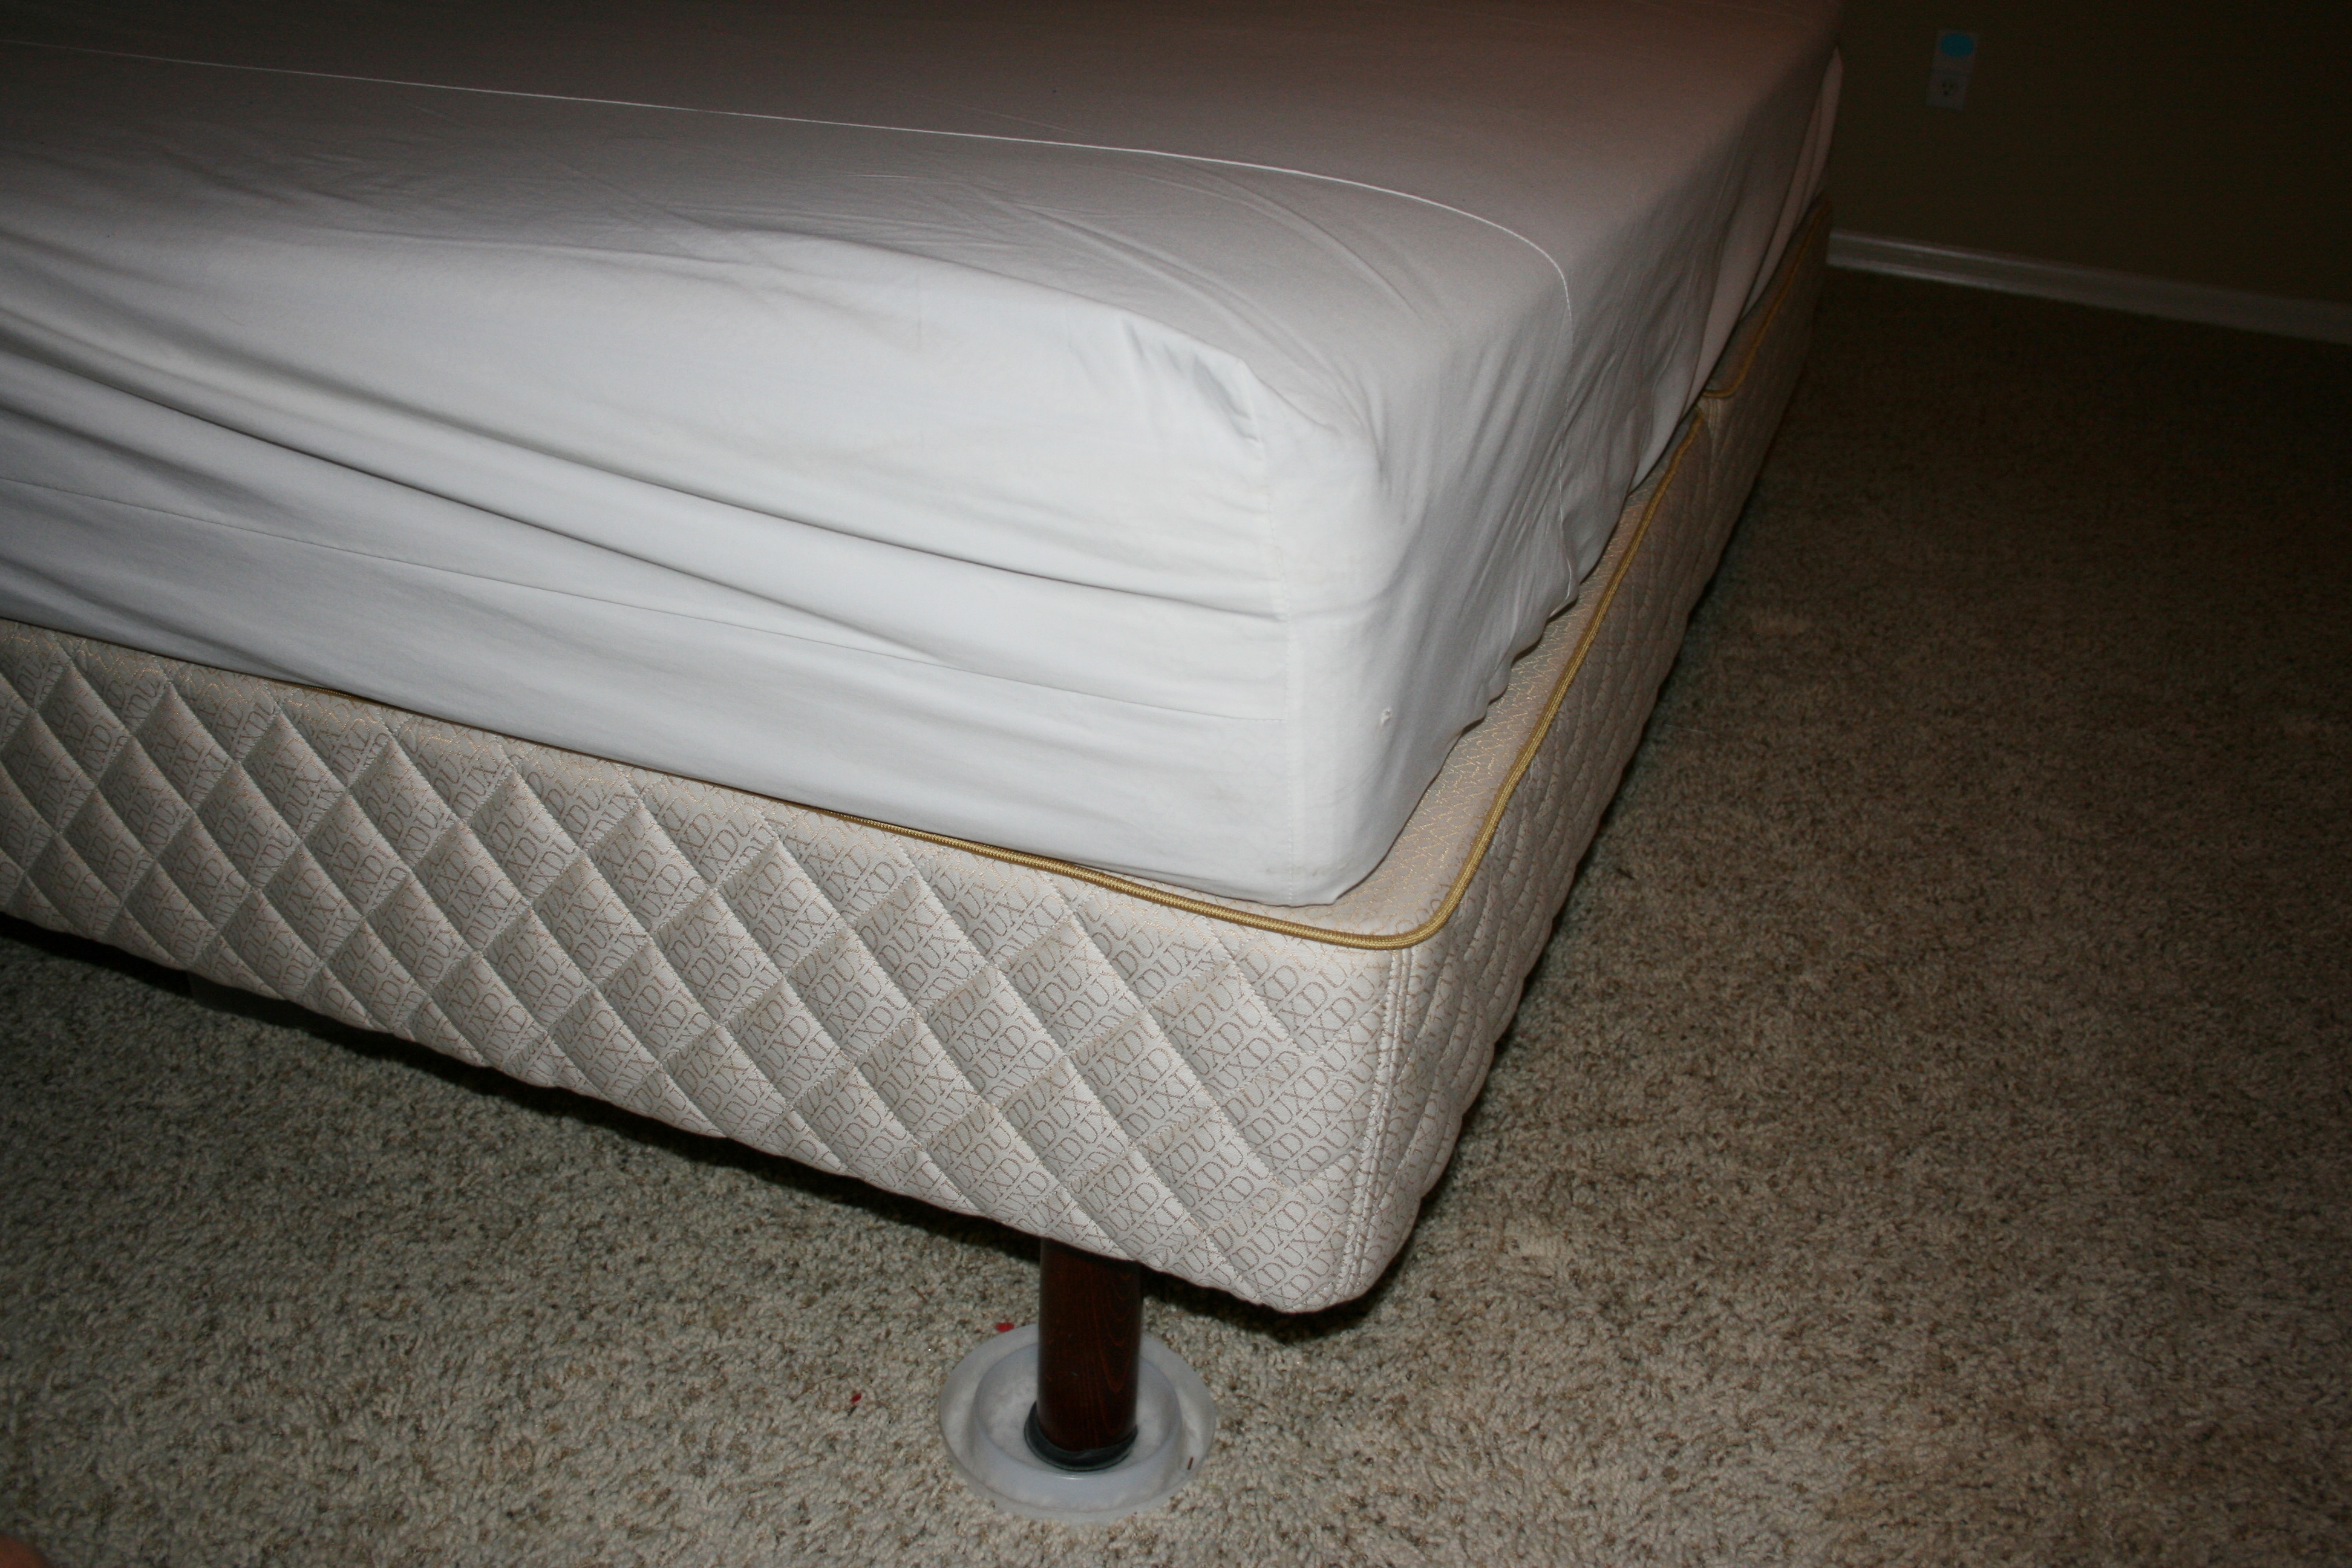 do bed bug encasements make your mattress moldy